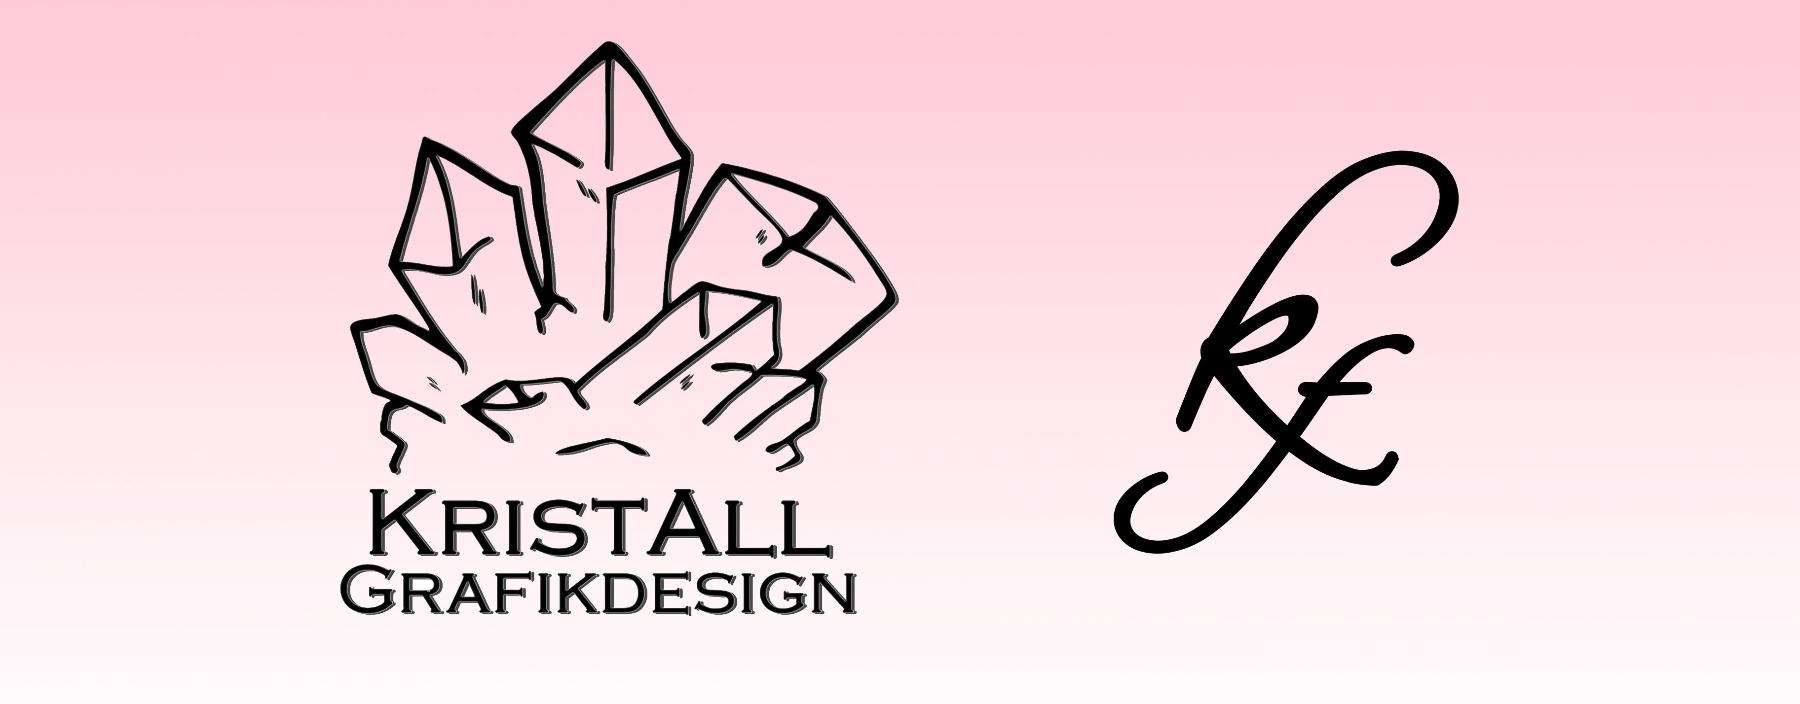 KristAll_Grafikdesign_Hintergrundbild_Shop